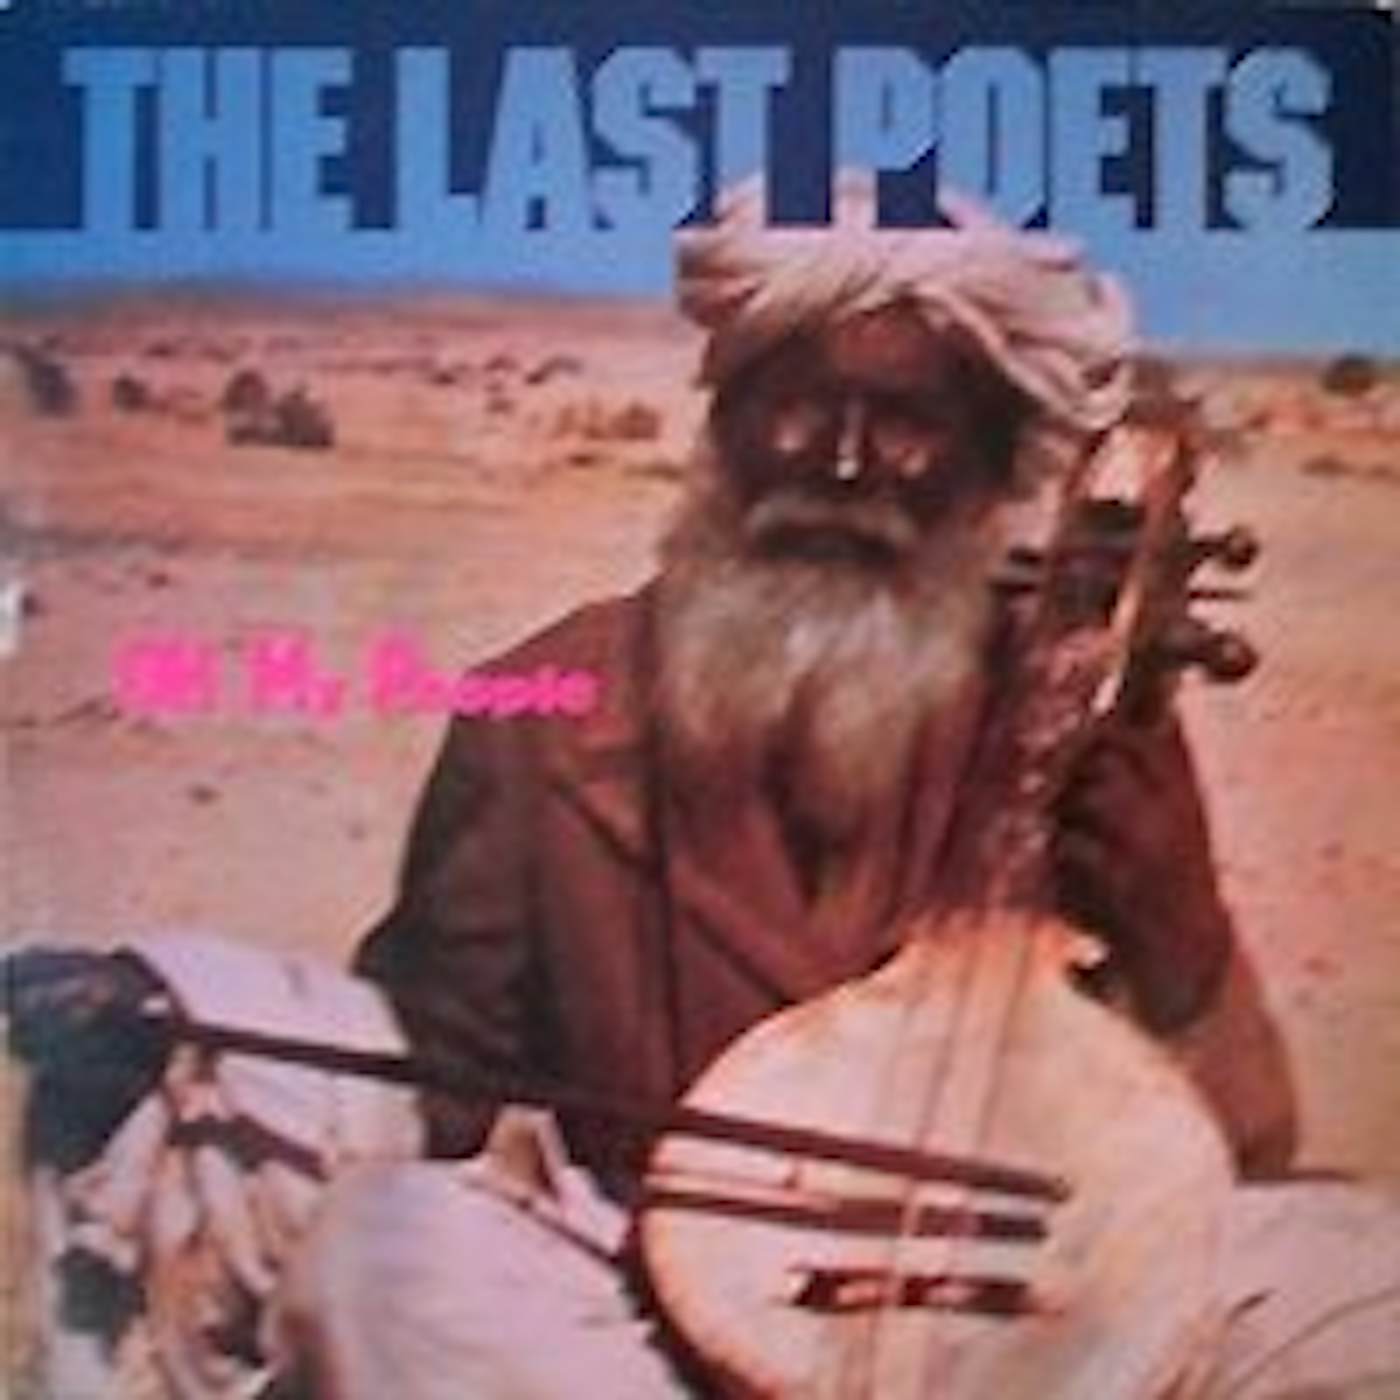 Last Poets Oh My People Vinyl Record